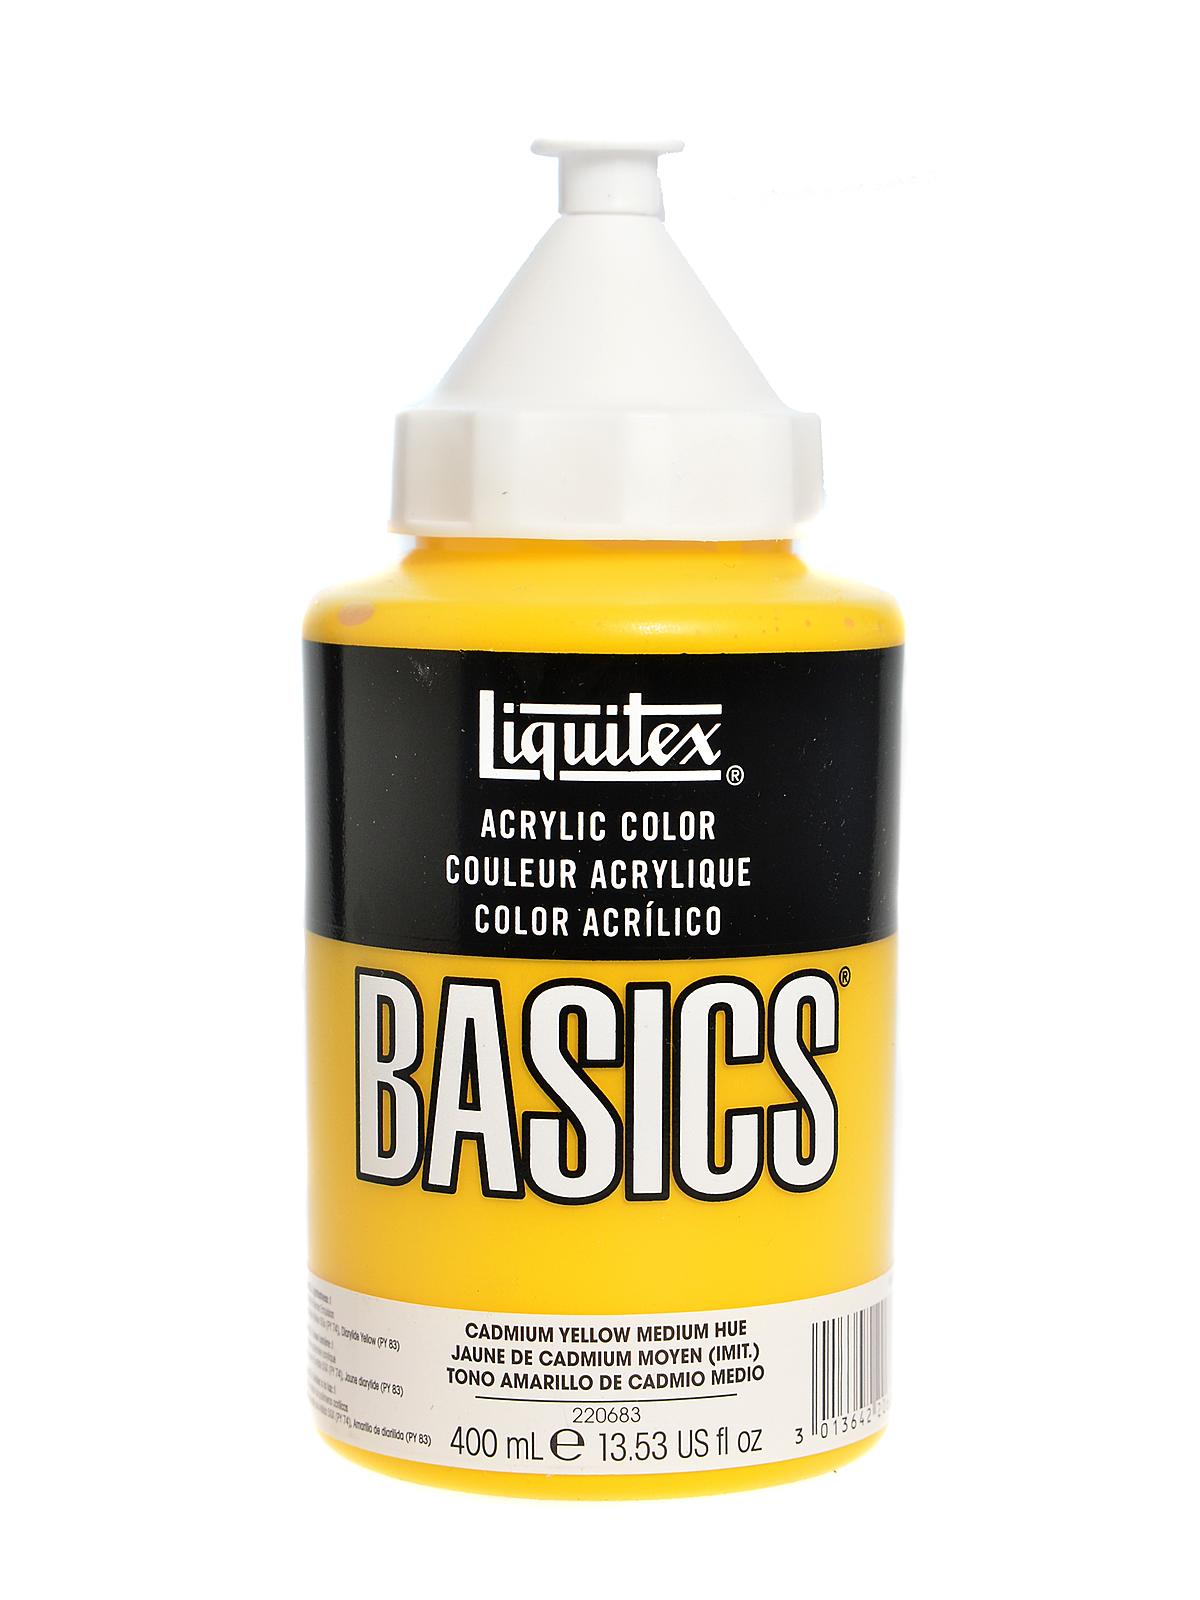 Basics Acrylics Colors Cadmium Yellow Medium Hue 13.5 Oz. Squeeze Bottle